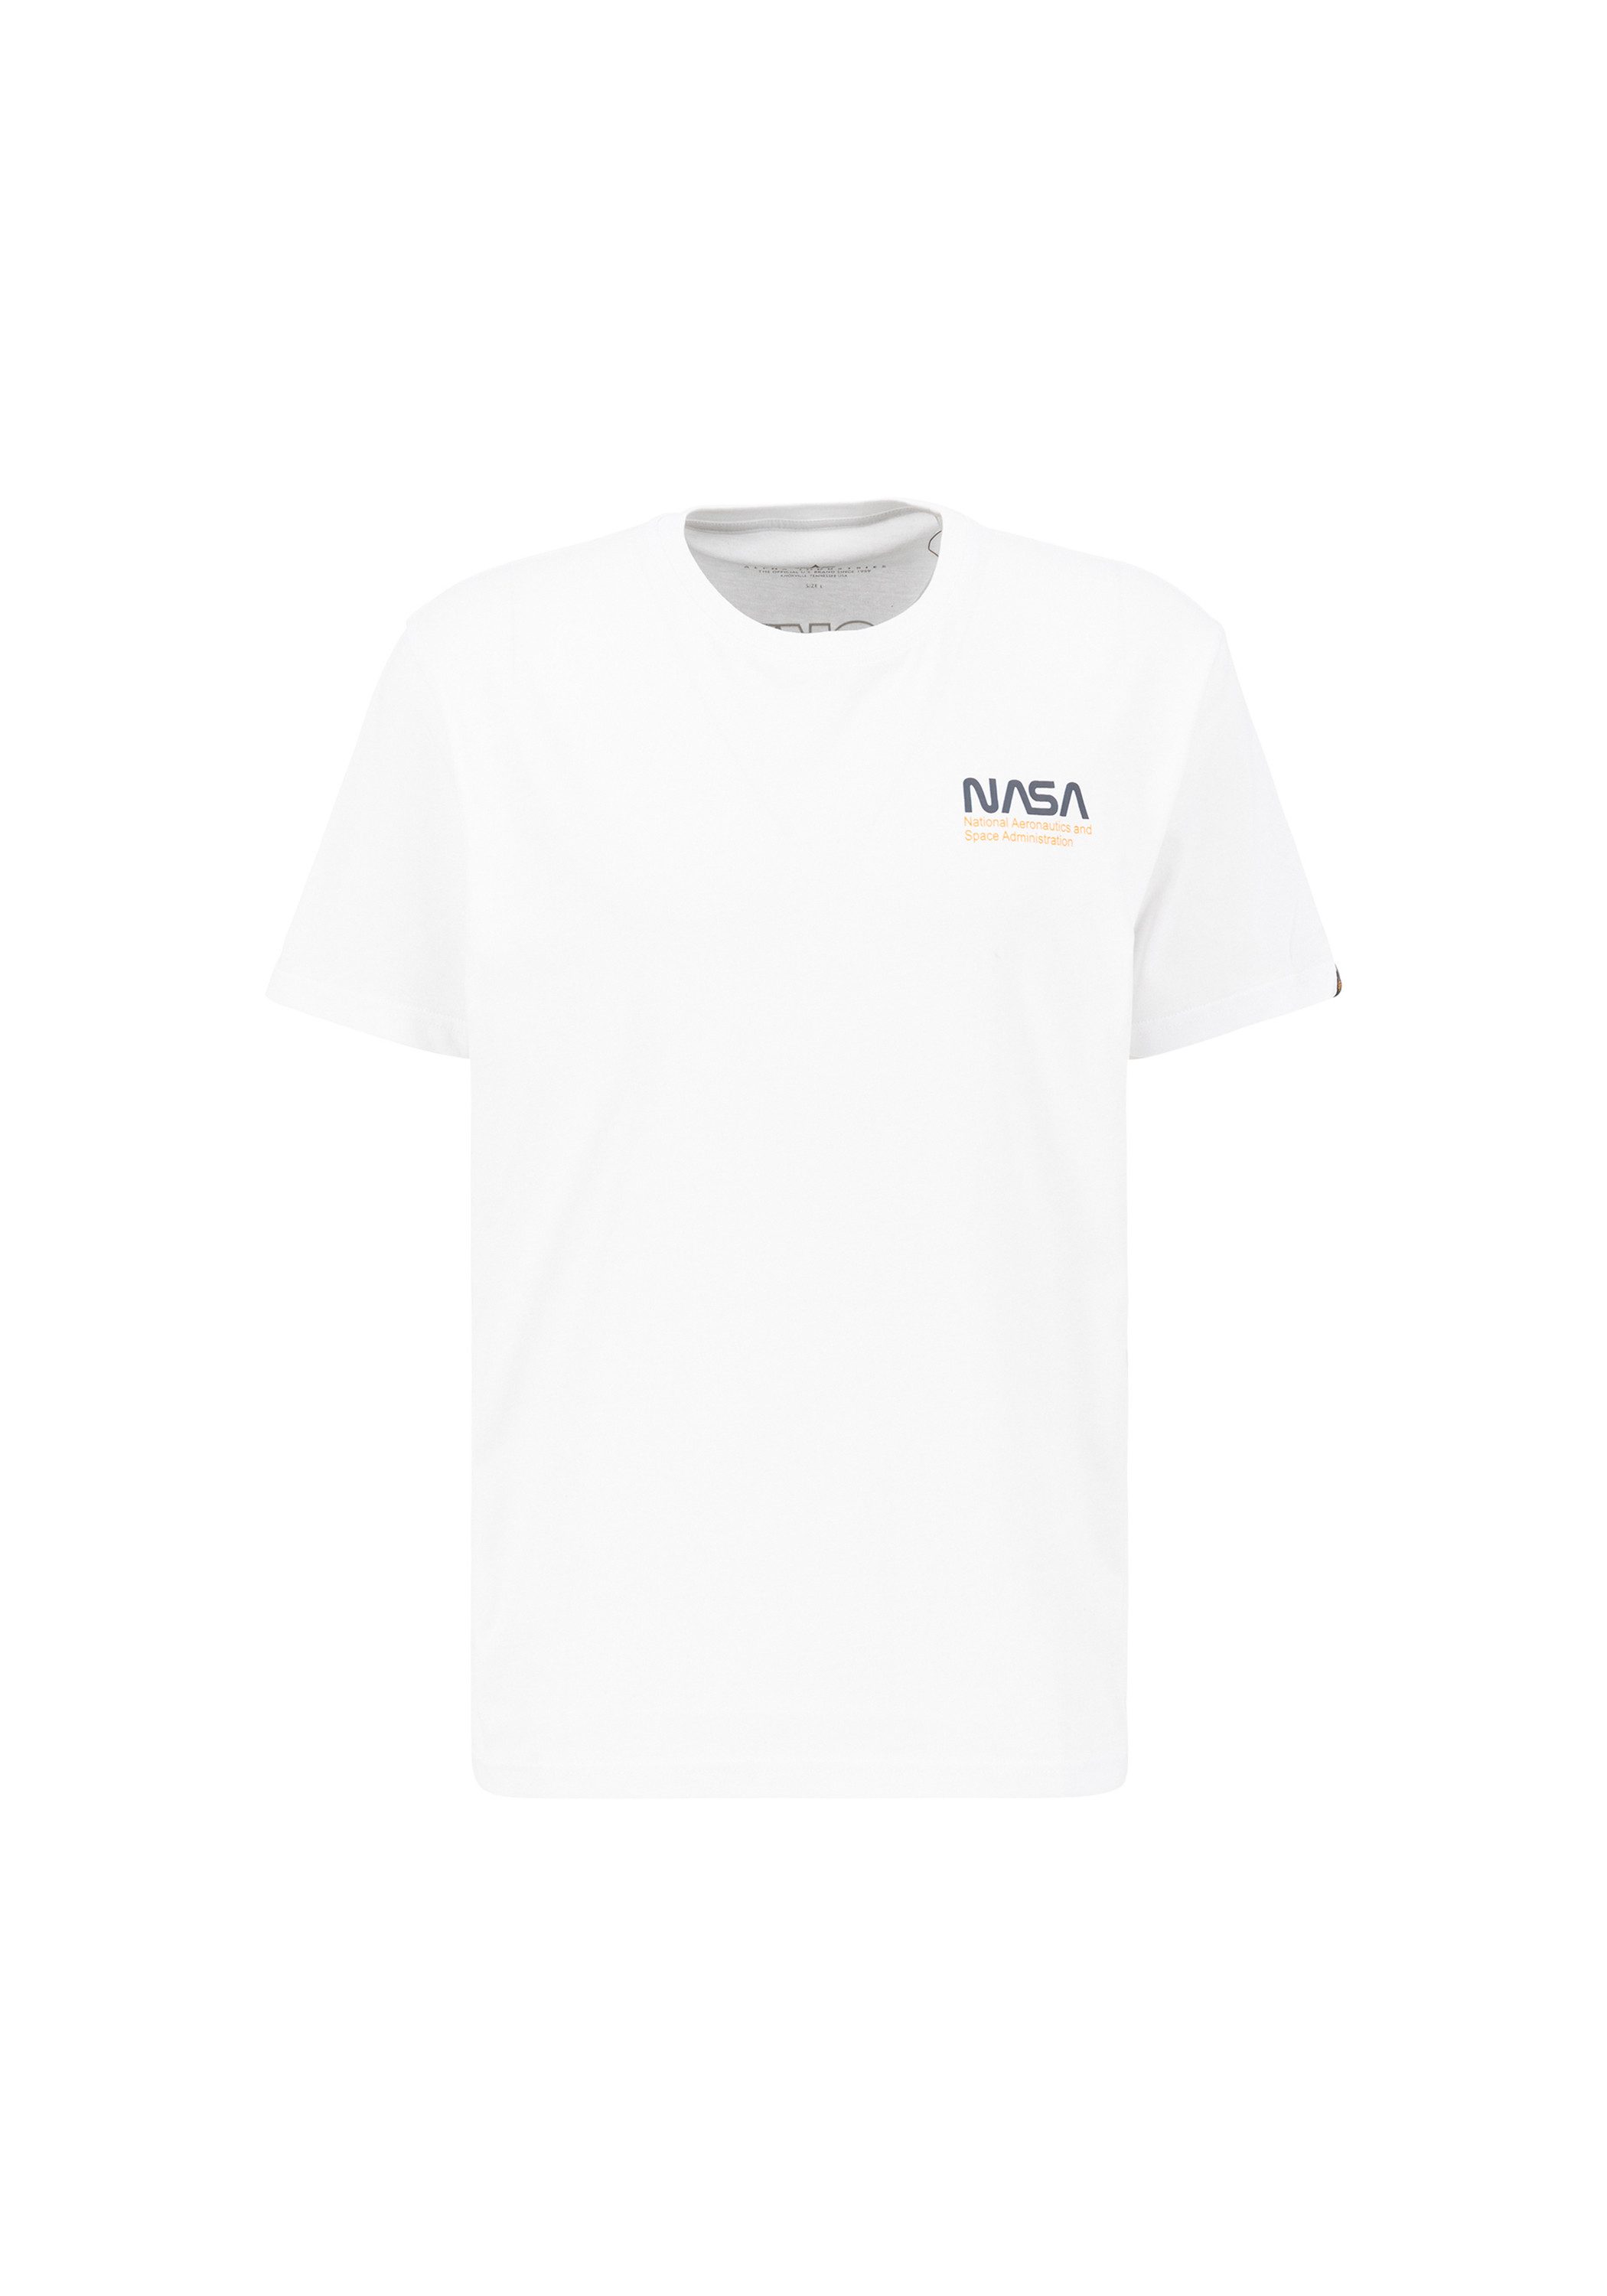 Alpha Industries T-shirt Men T-Shirts Skylab NASA T